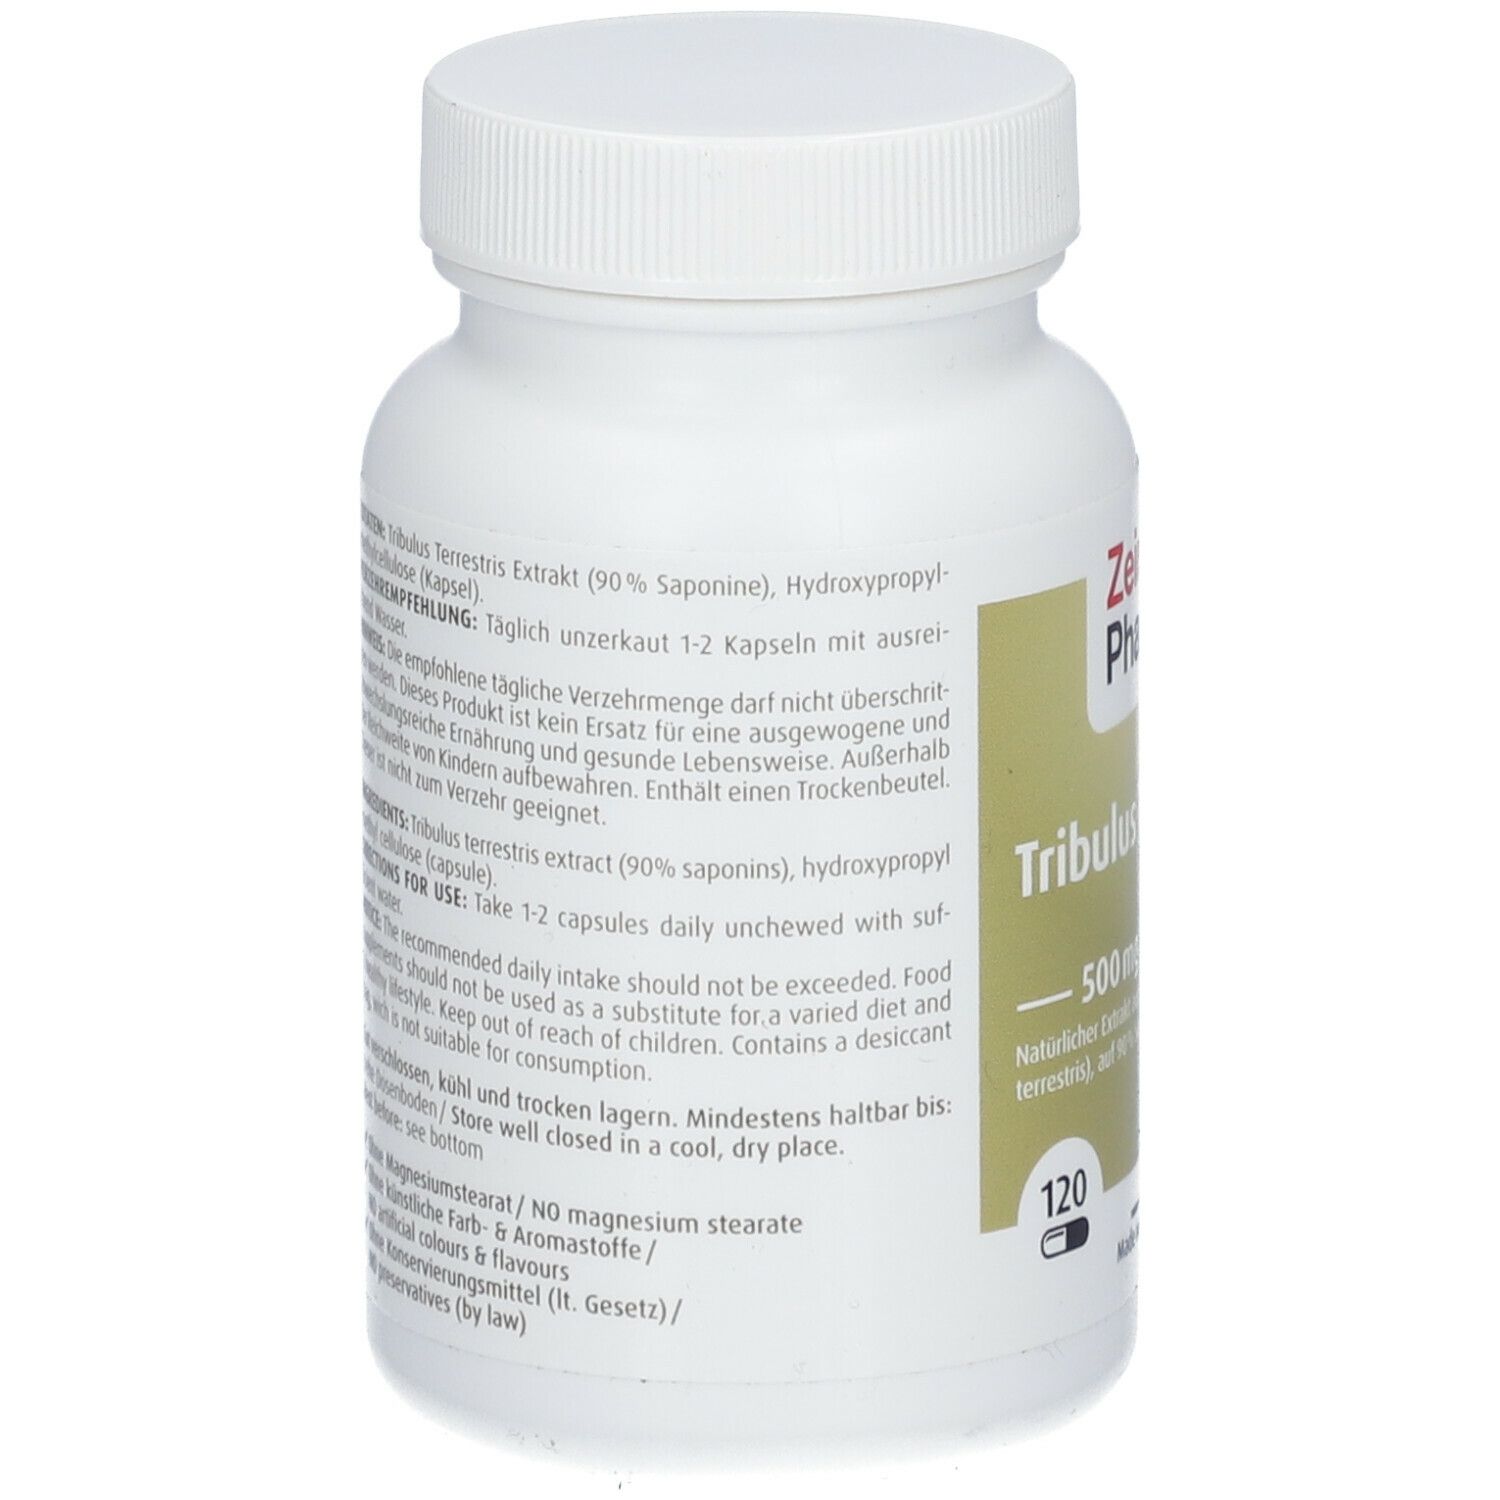 ZeinPharma® Tribulus Terrestris Extrakt